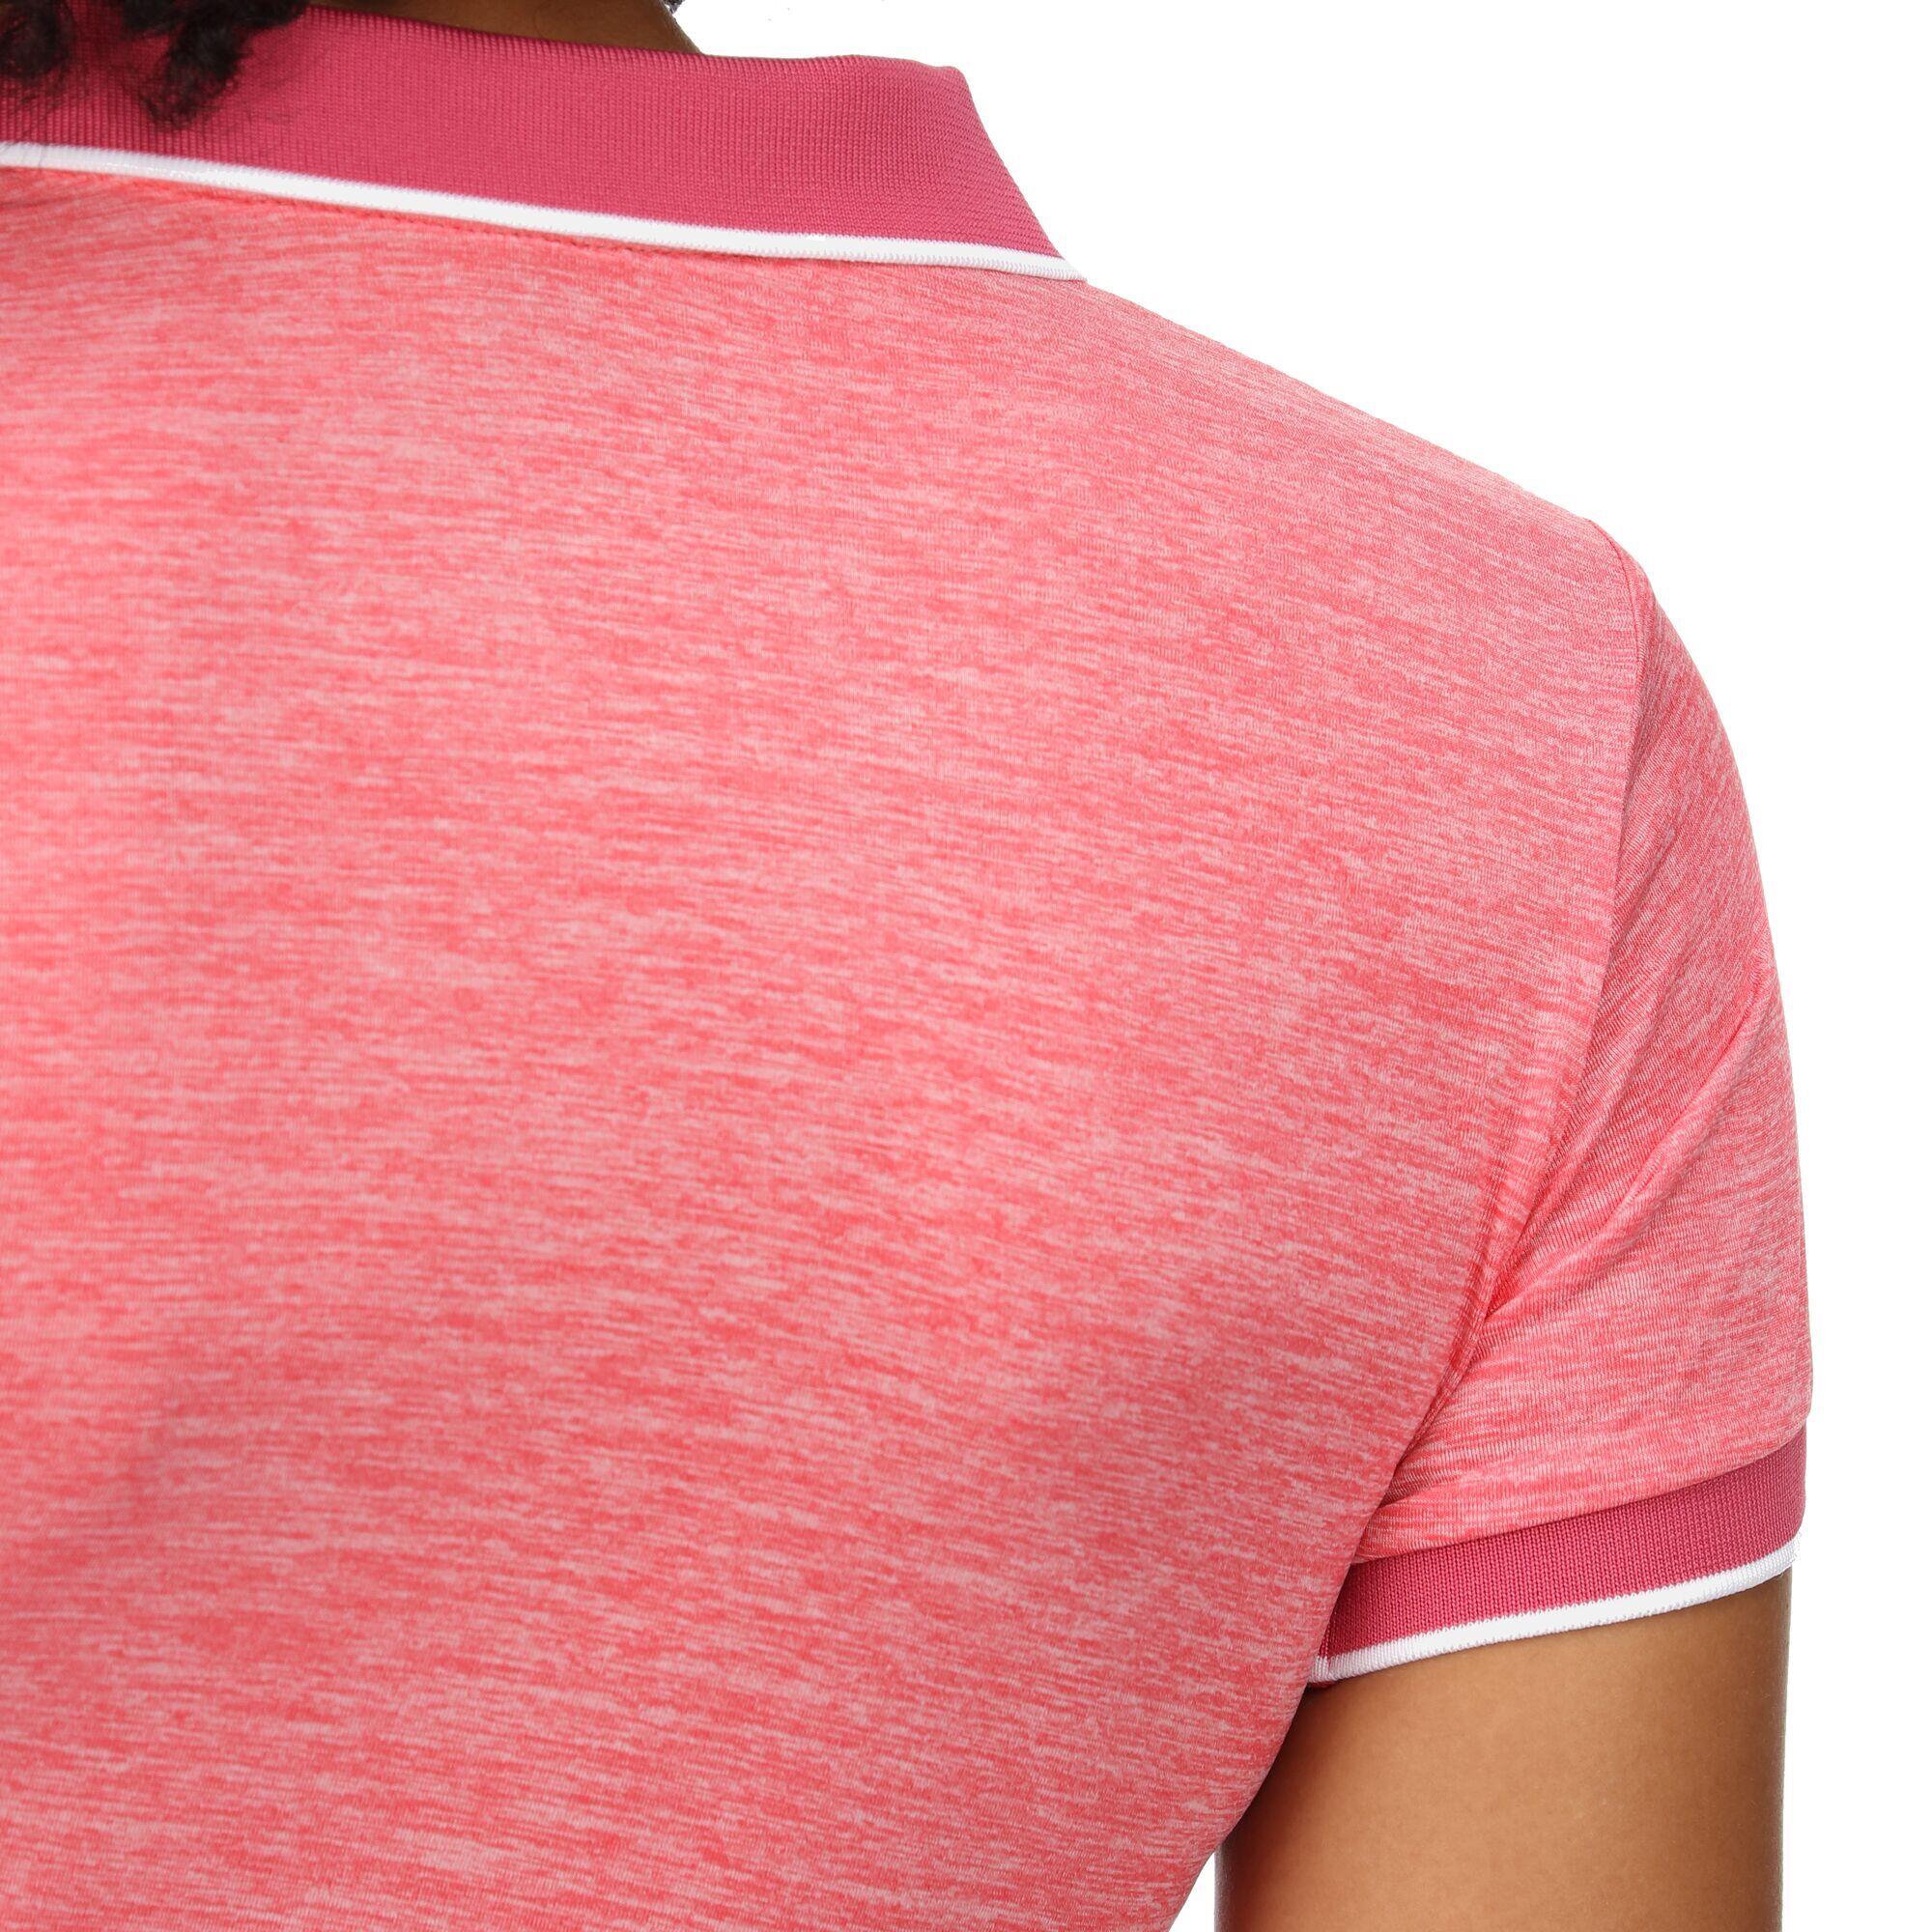 Remex II Women's Walking Short Sleeve T-Shirt - Tropical Pink 6/7